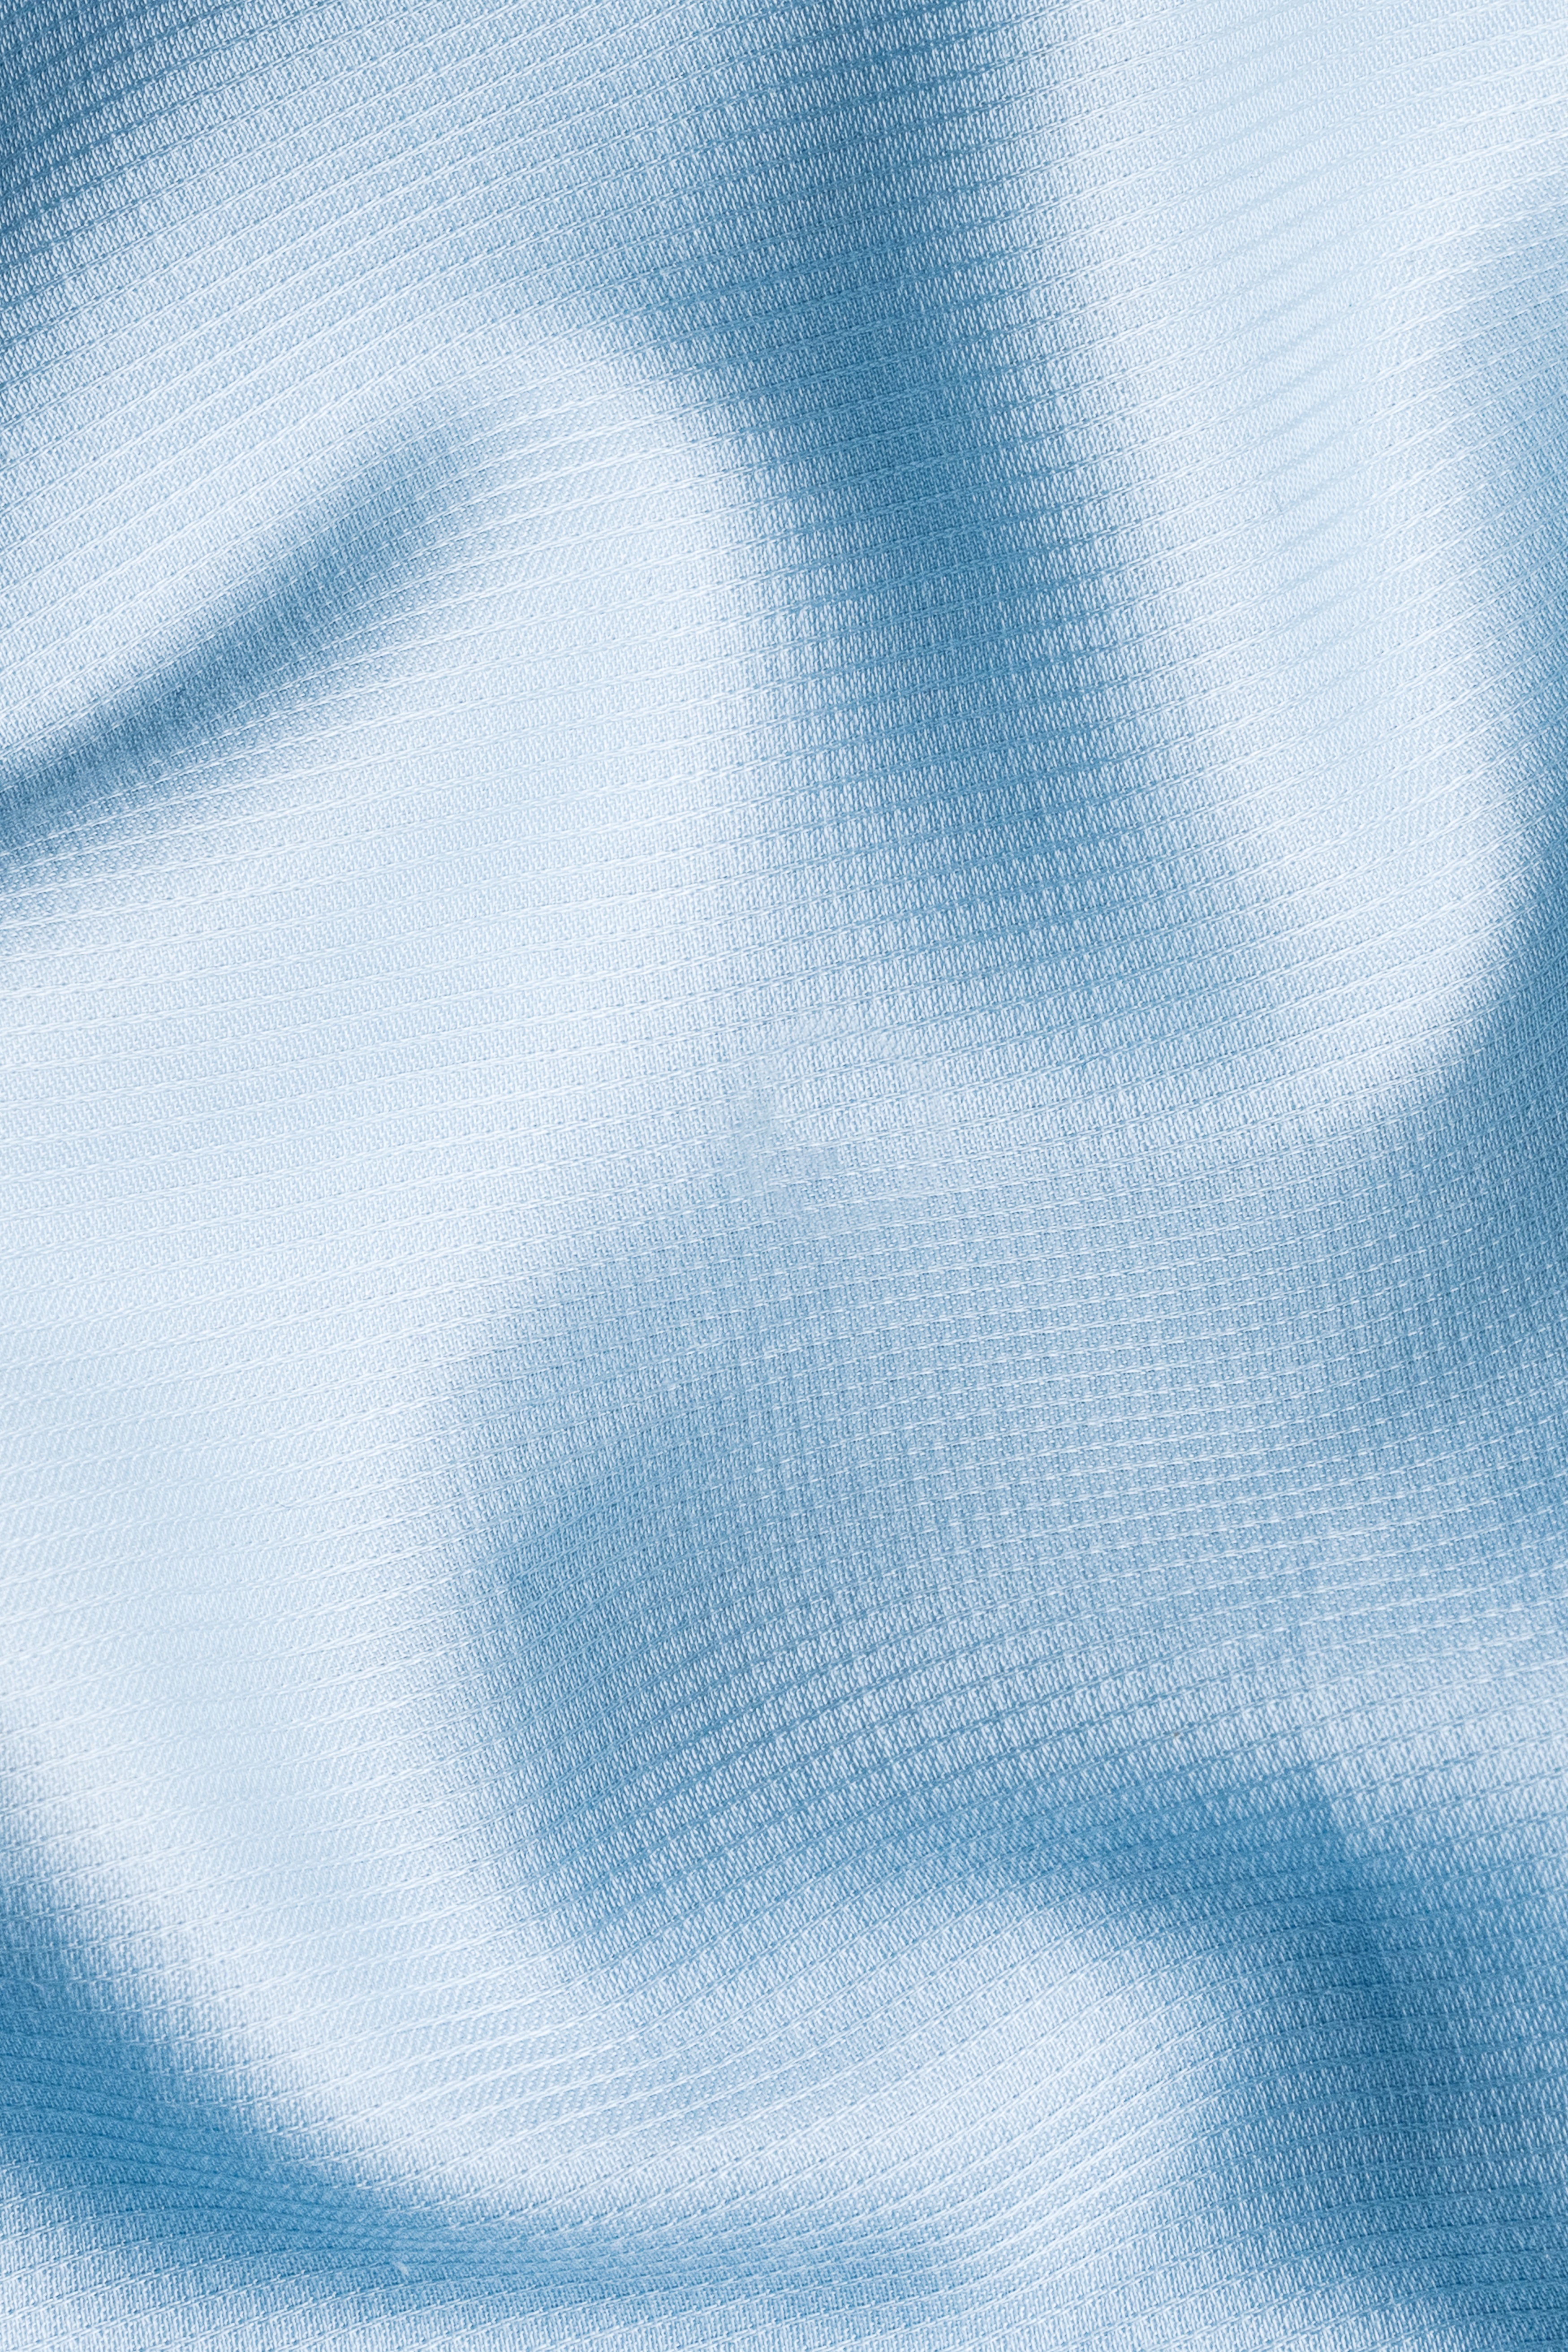 Regent Blue Dobby Textured Giza Cotton Shorts SR381-28, SR381-30, SR381-32, SR381-34, SR381-36, SR381-38, SR381-40, SR381-42, SR381-44